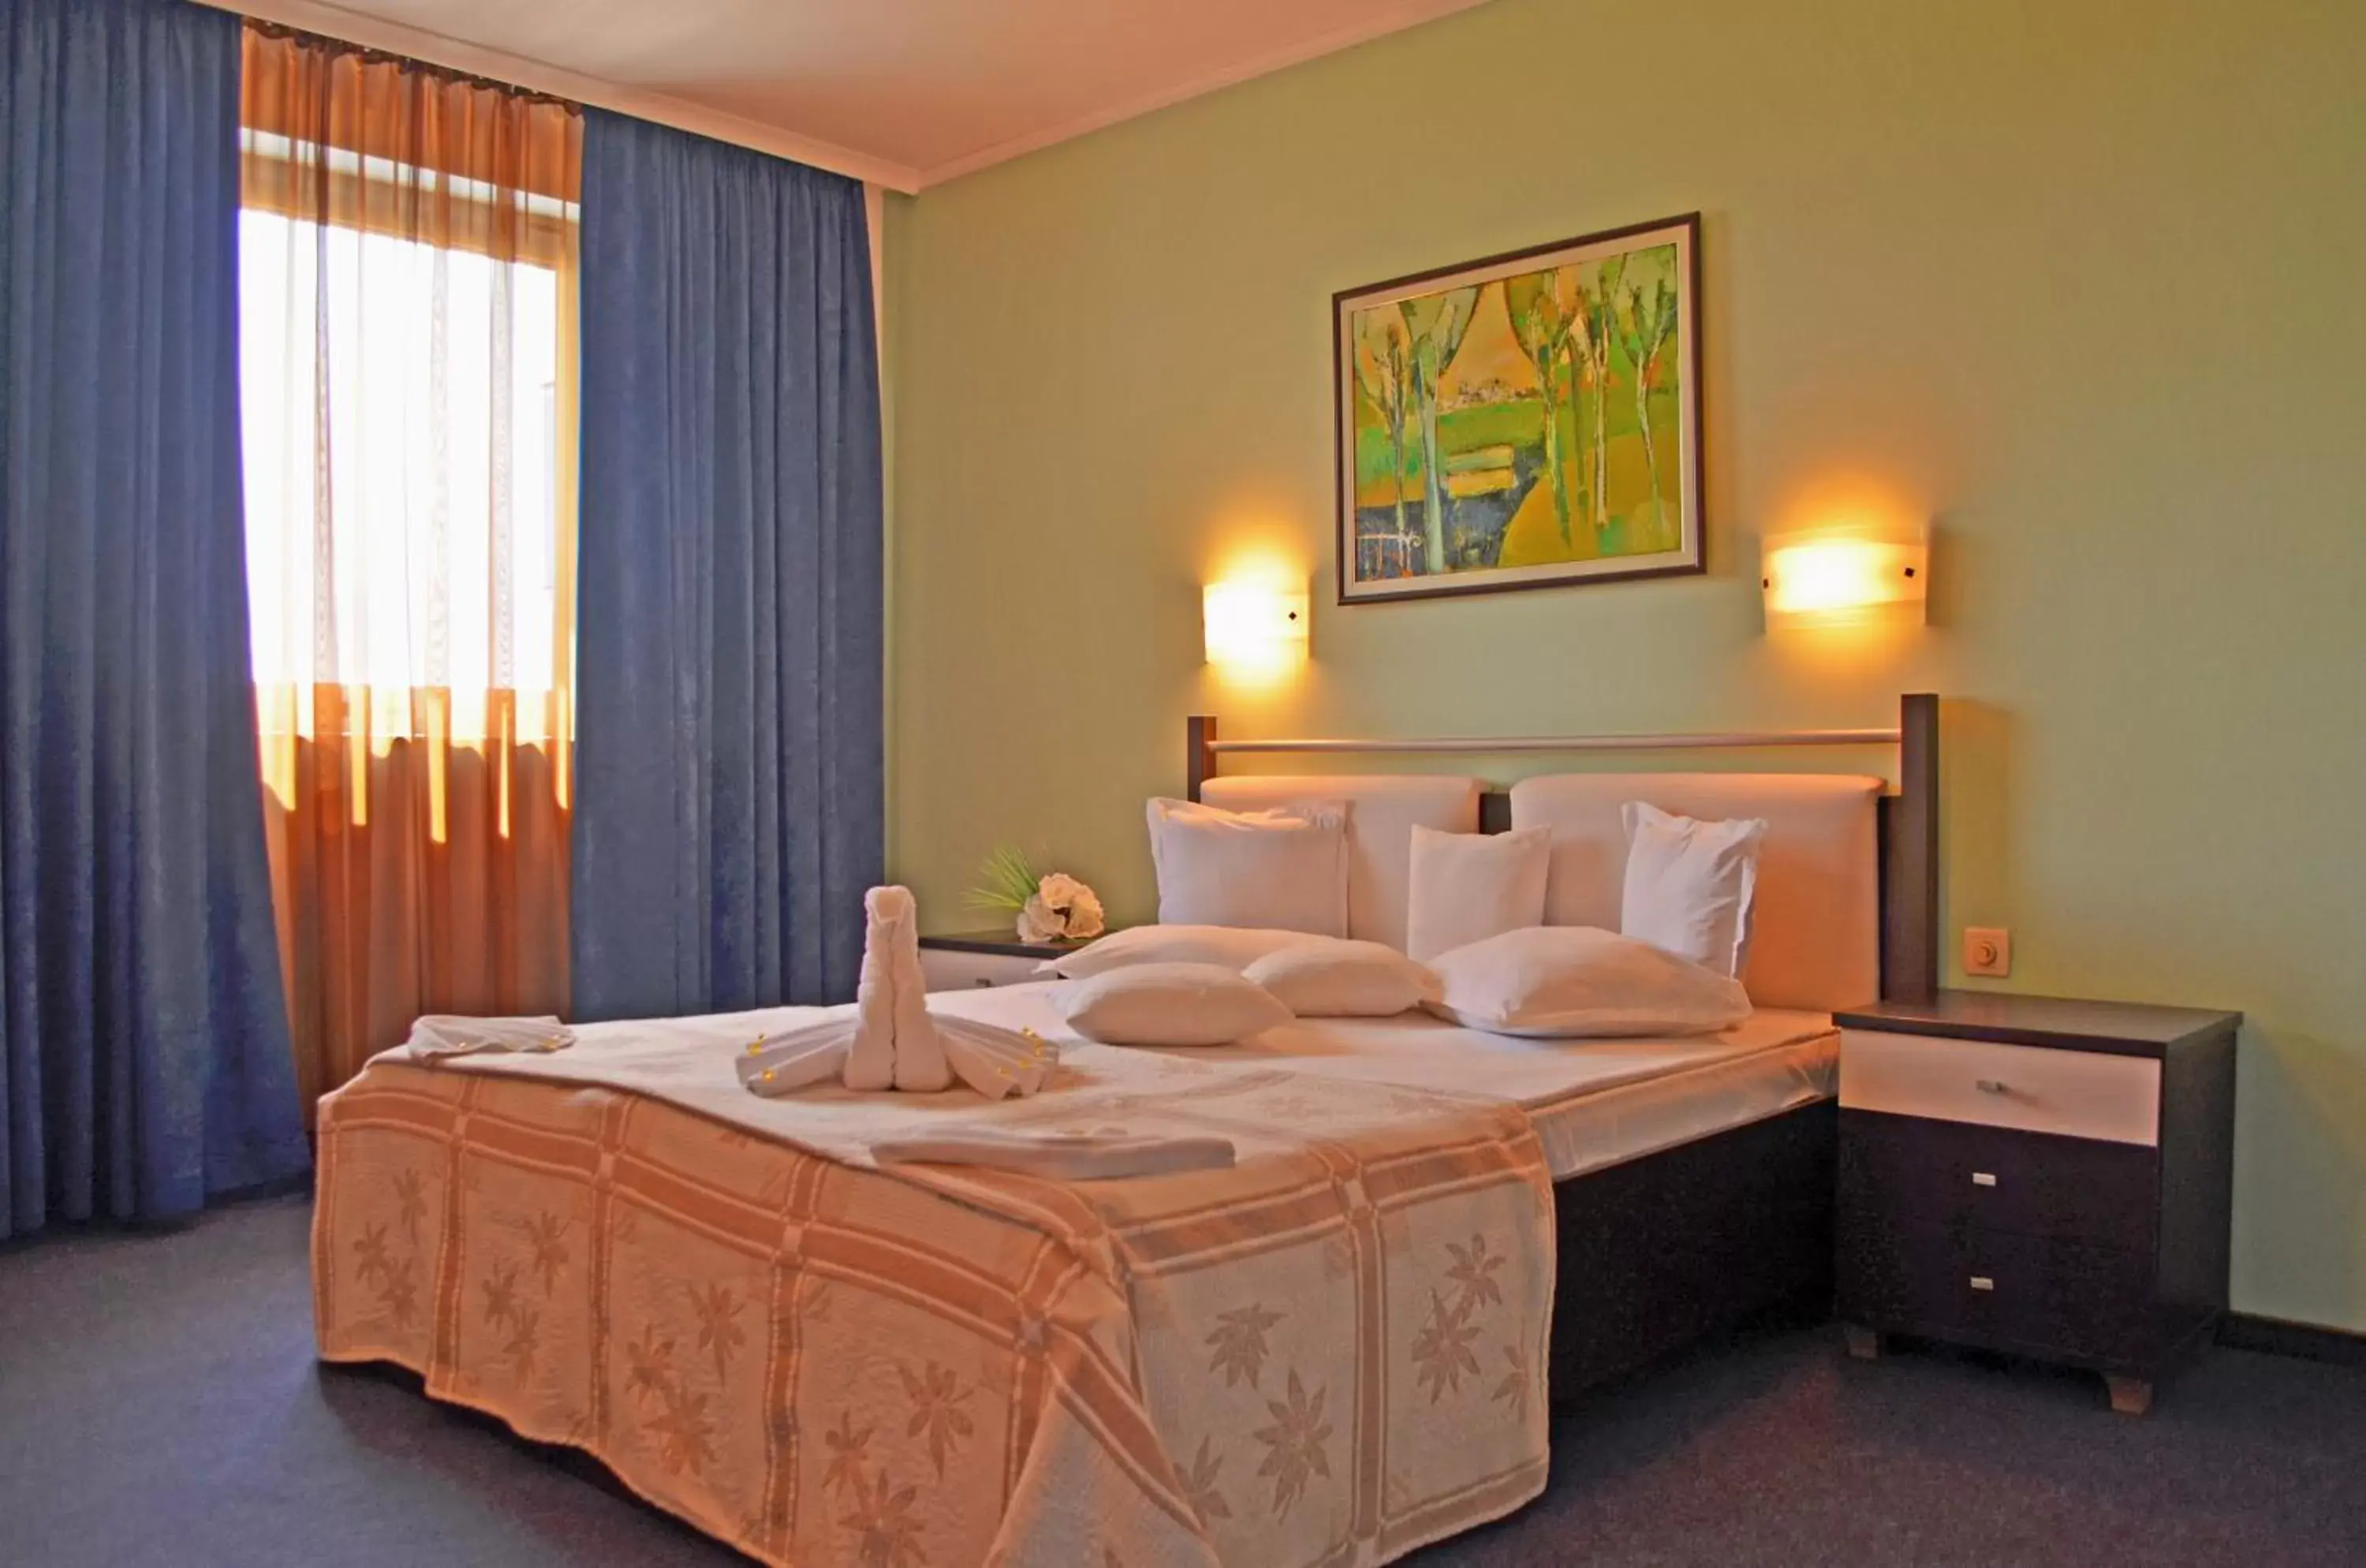 Bed, Room Photo in Aqua Hotel